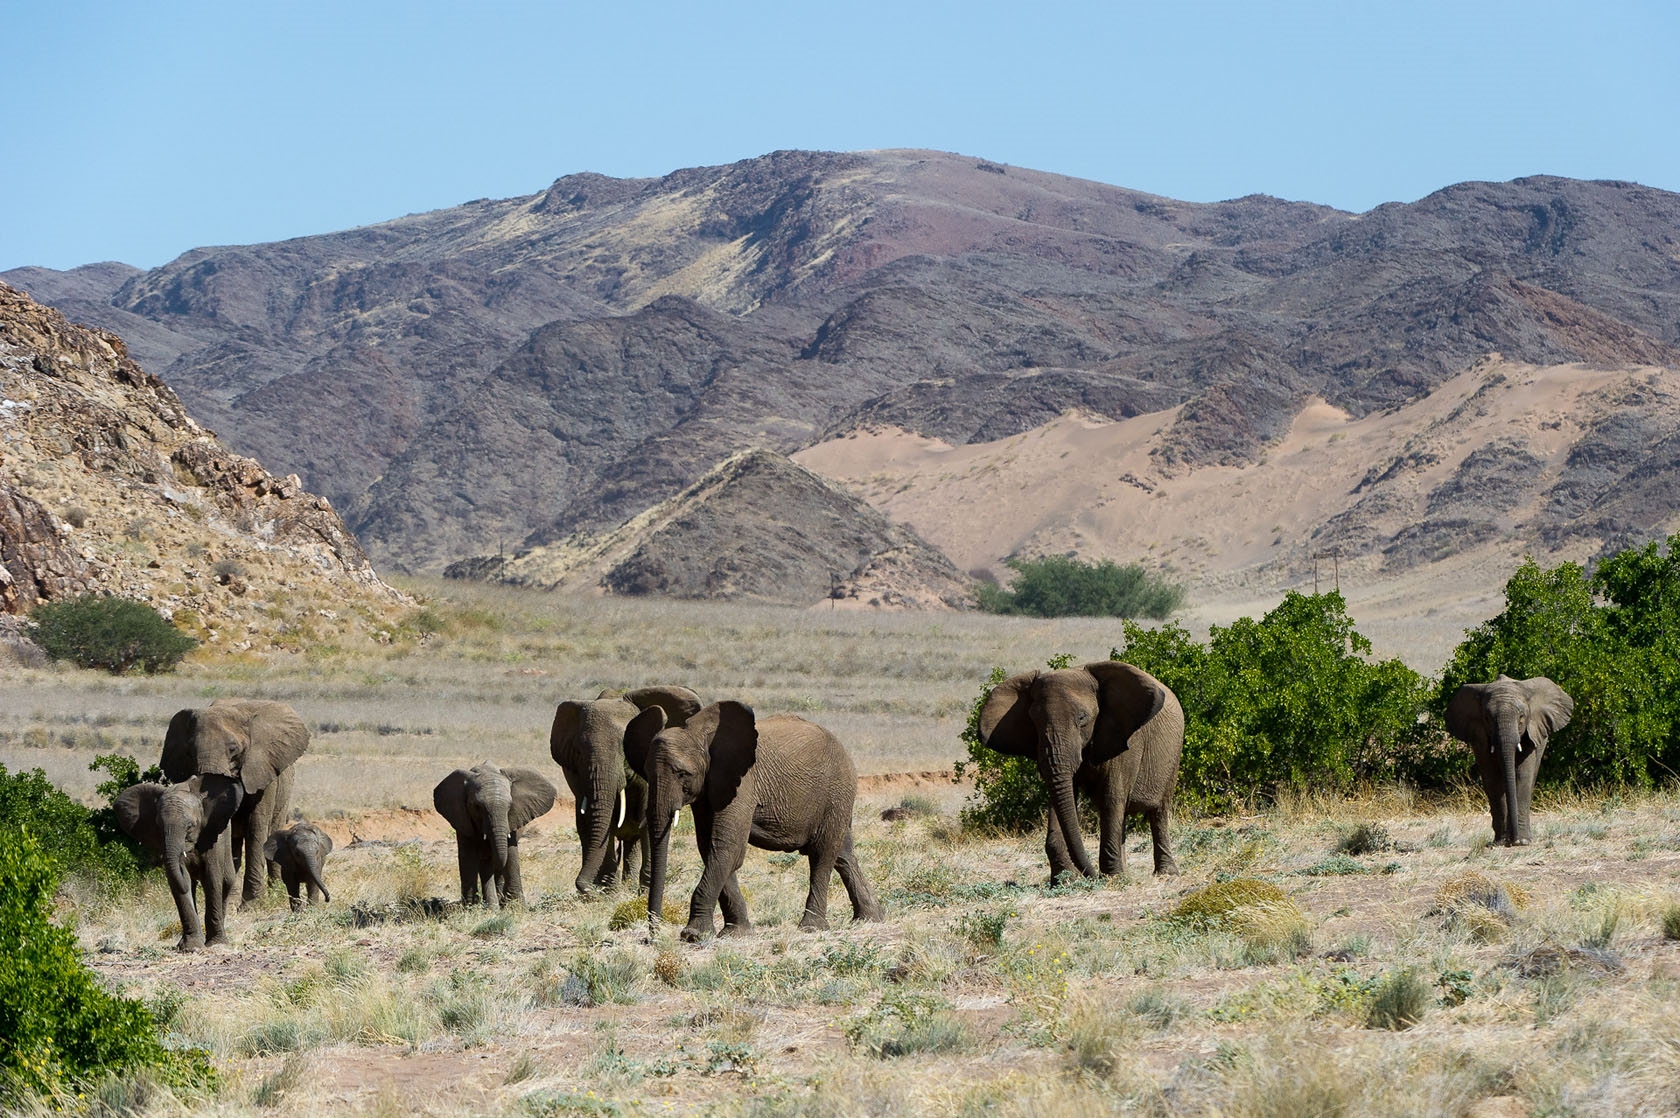 Desert-adapted elephant 